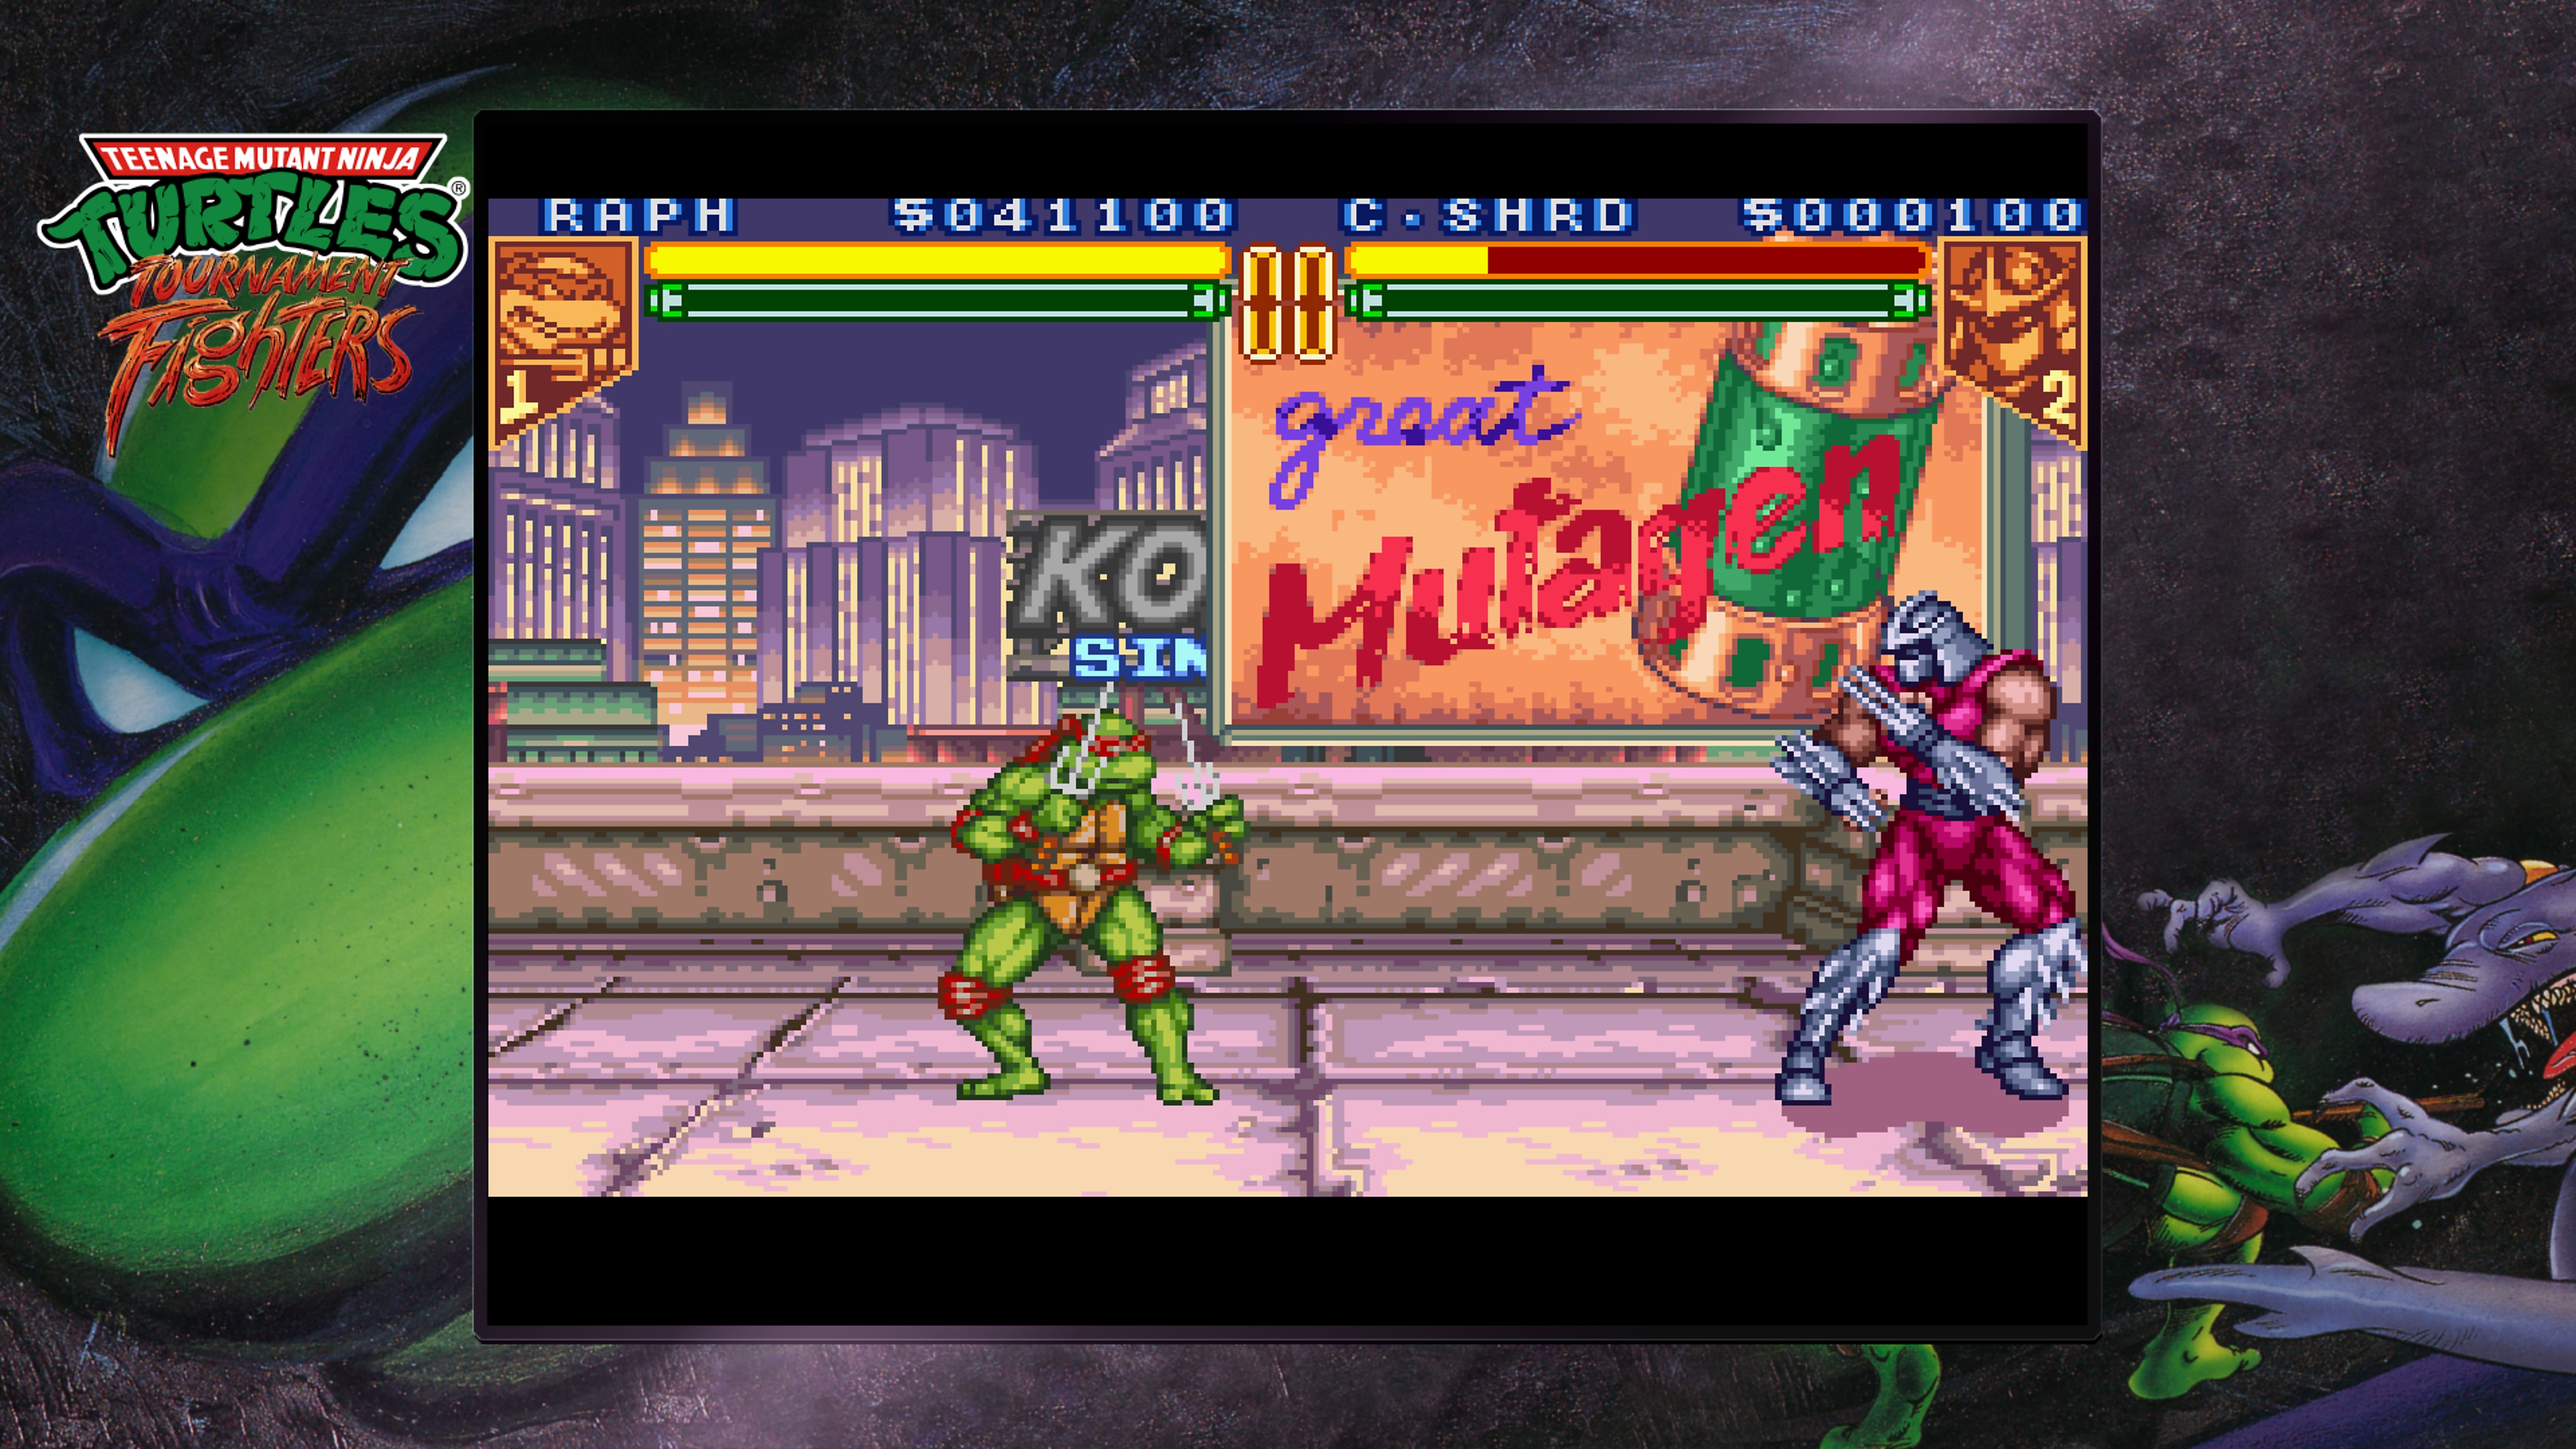 『Teenage Mutant Ninja Turtles Collection - Tournament Fighters』で屋上を舞台にシュレッダーと戦うラファエルのスクリーンショット